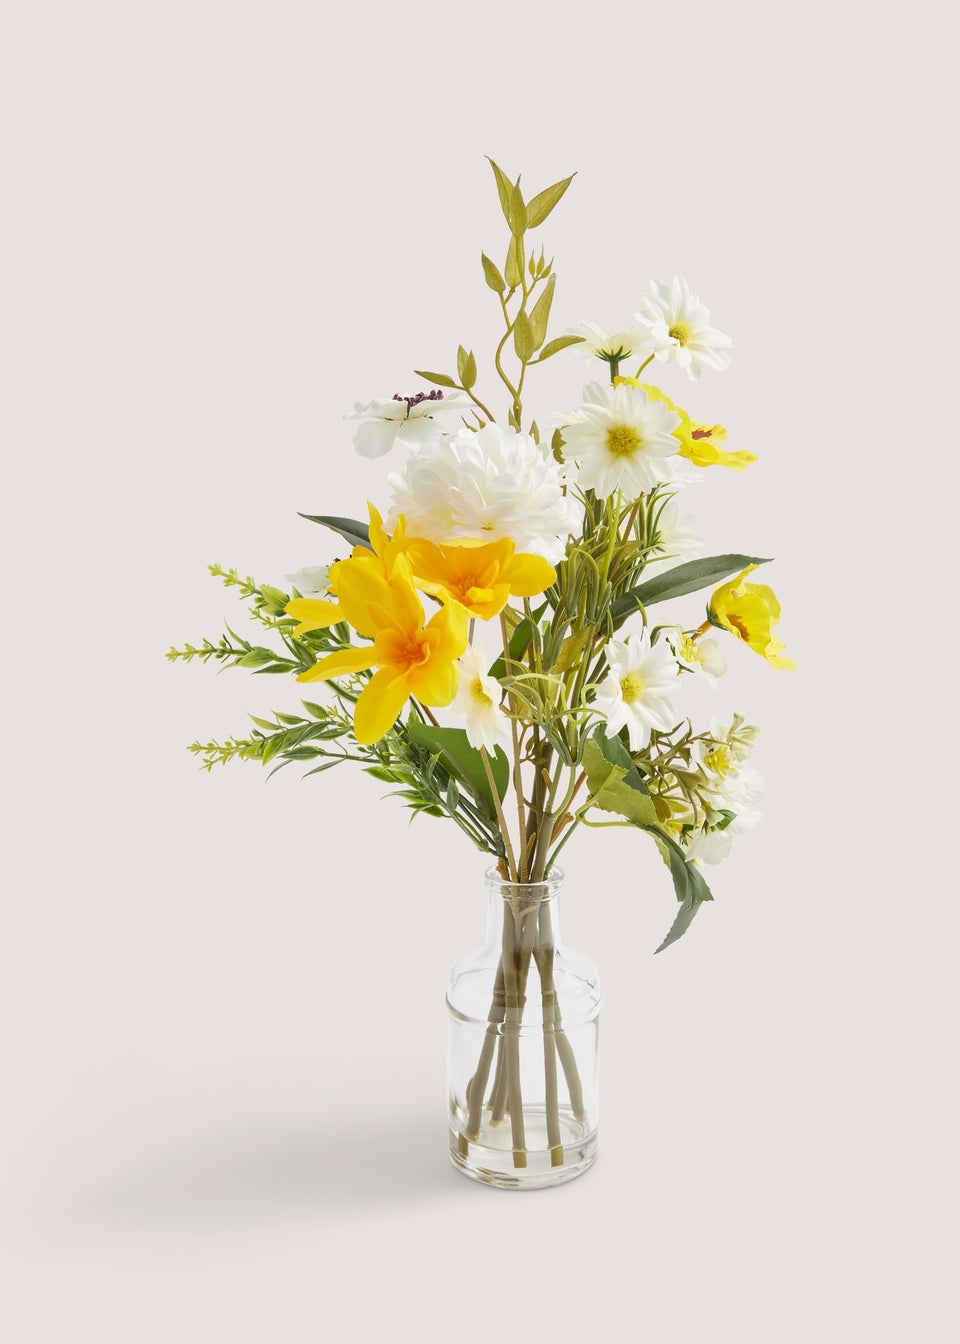 Mixed Flowers in Glass Vase (38cm x 23cm x 22cm)